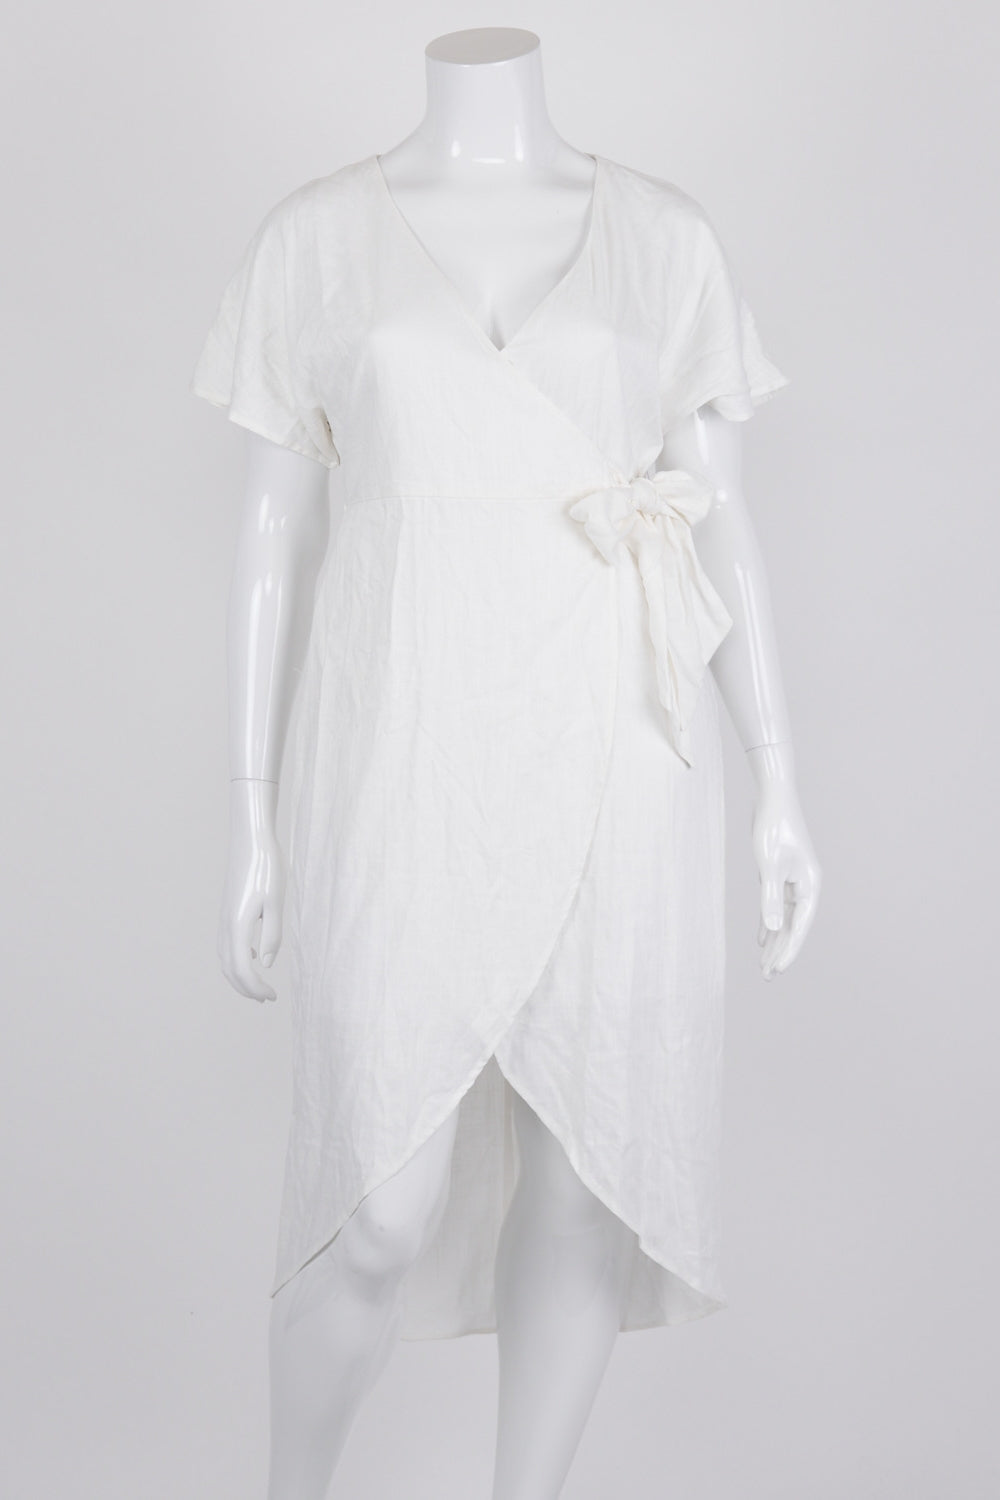 Tussah White Cori Midi Dress 14